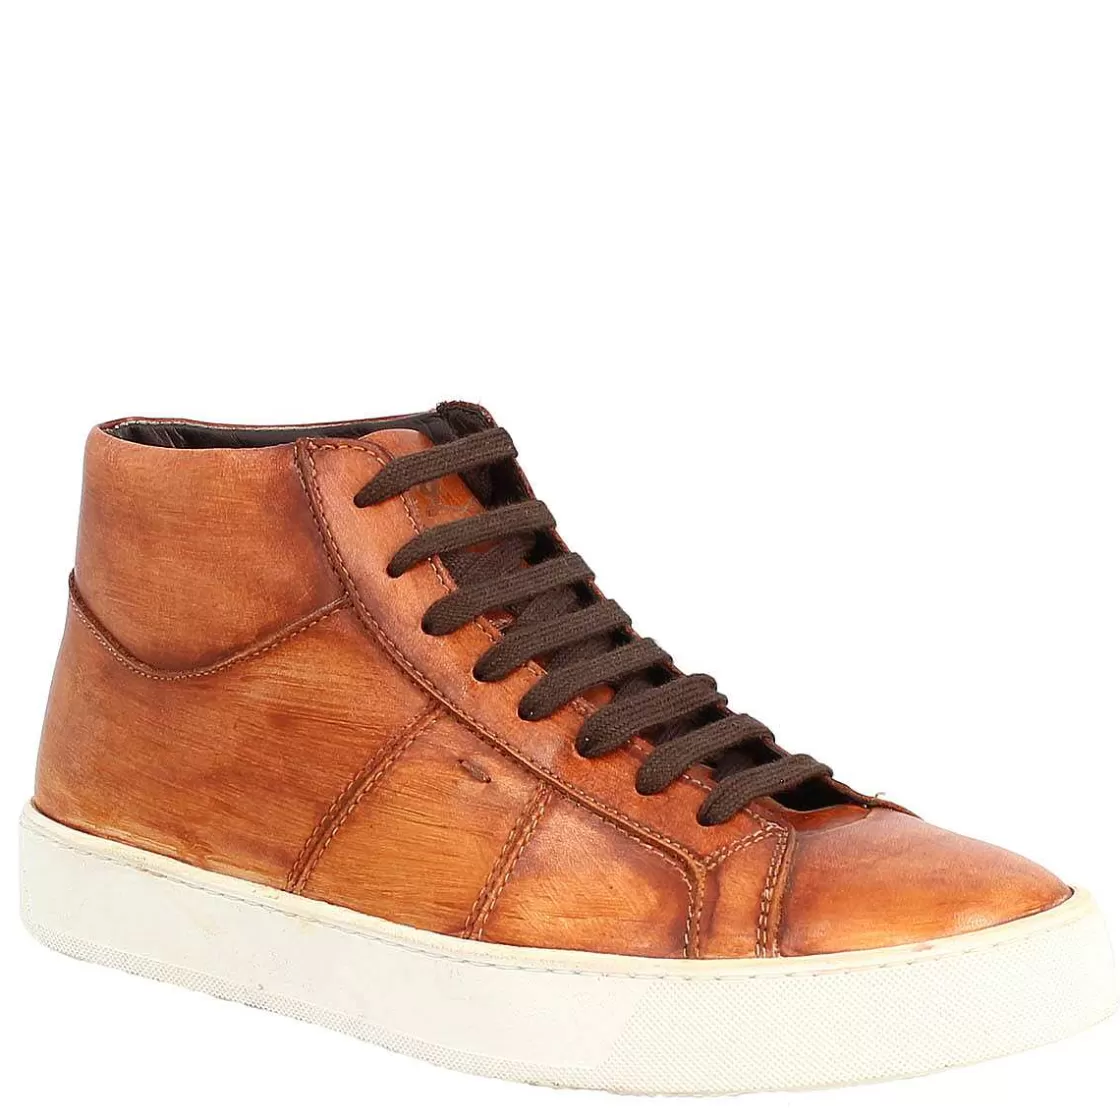 Leonardo Men'S Handmade High-Top Sneakers In Tan-Colored Leather Best